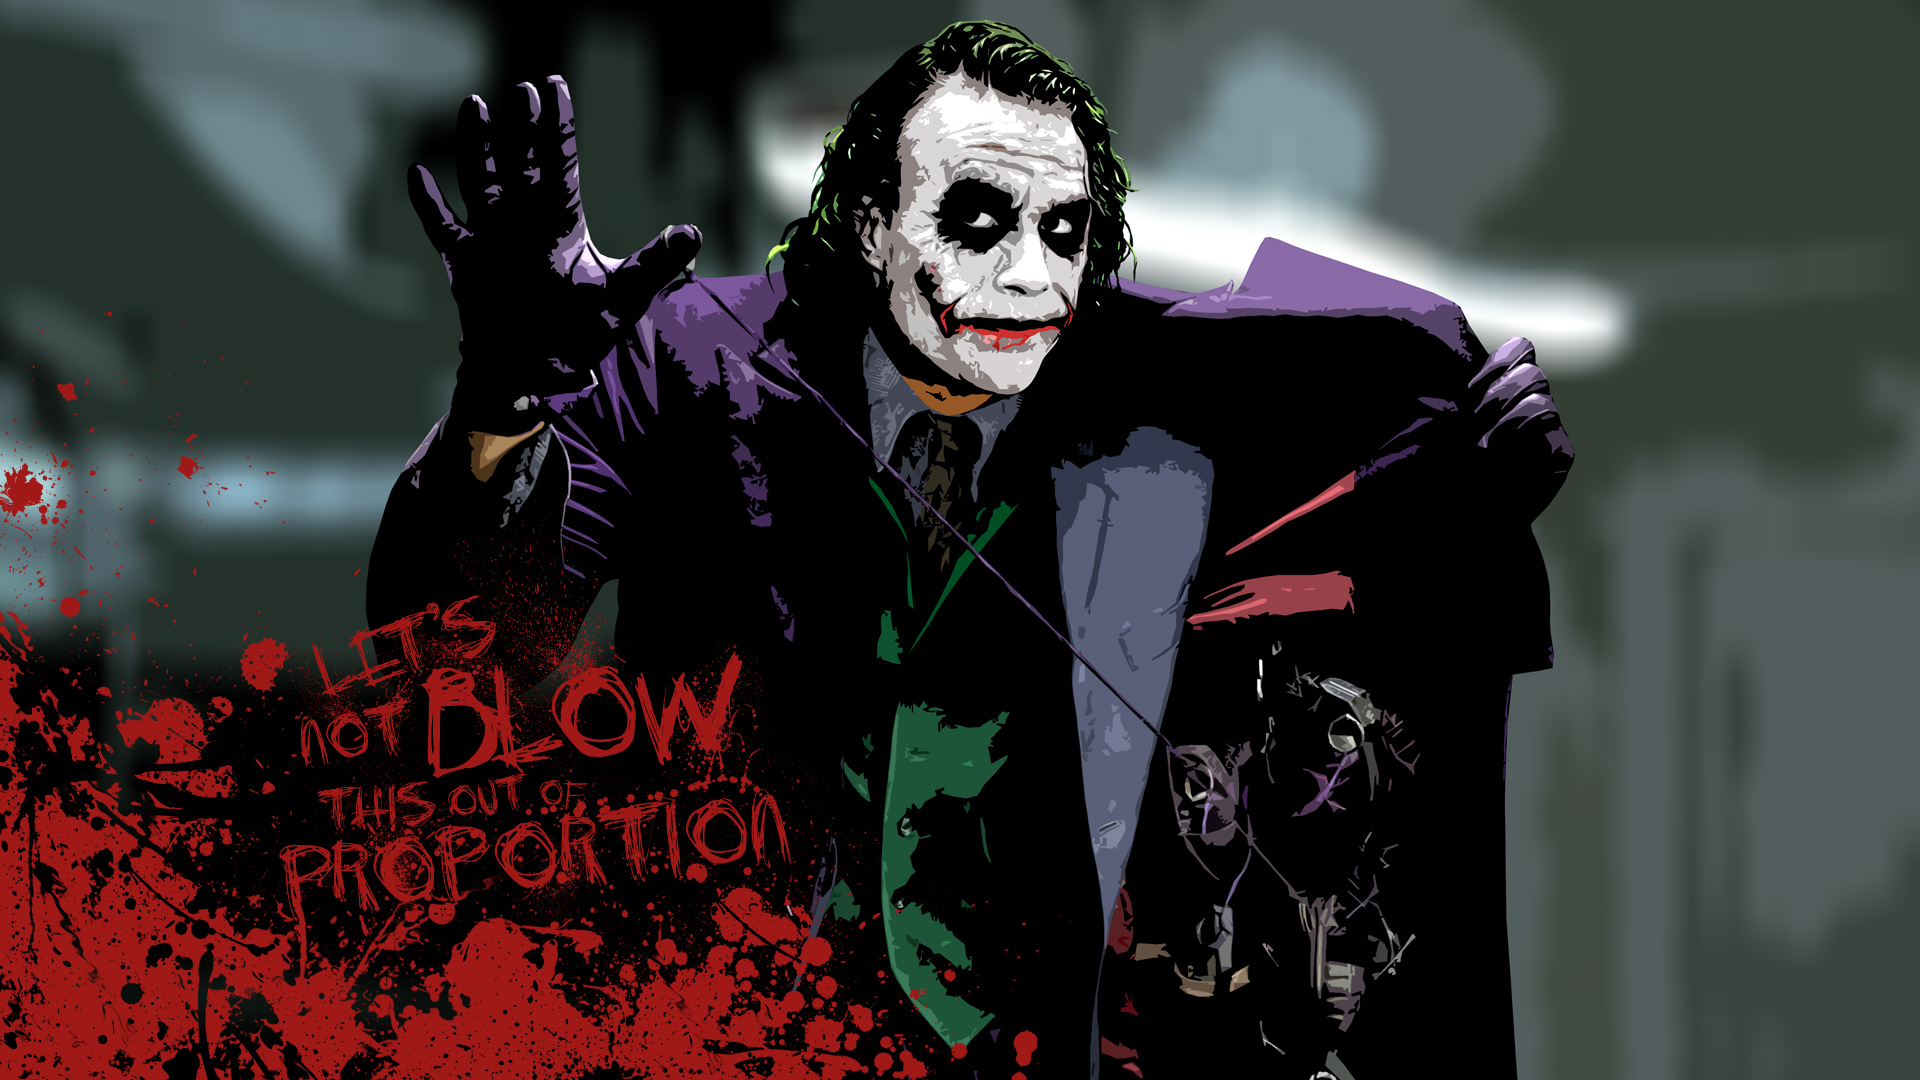 The Joker Image Wallpaper Photos